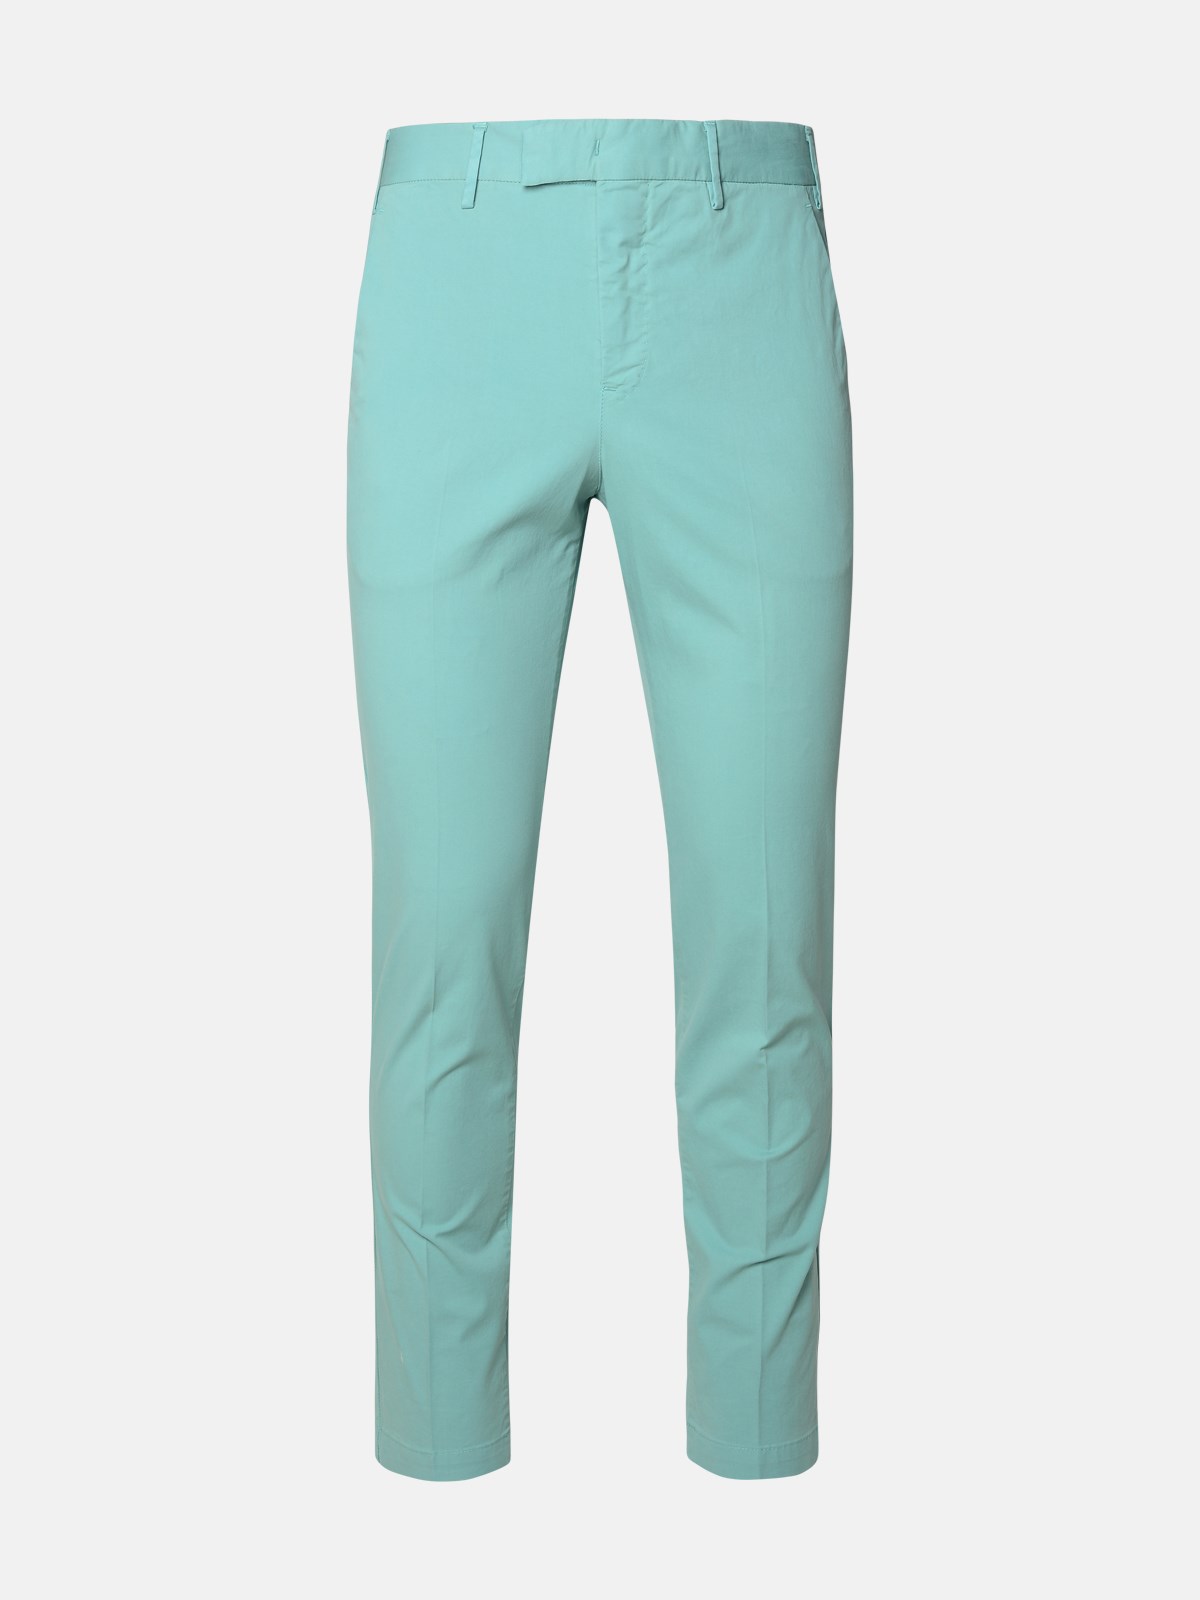 Shop Pt Torino Light Blue Cotton Trousers